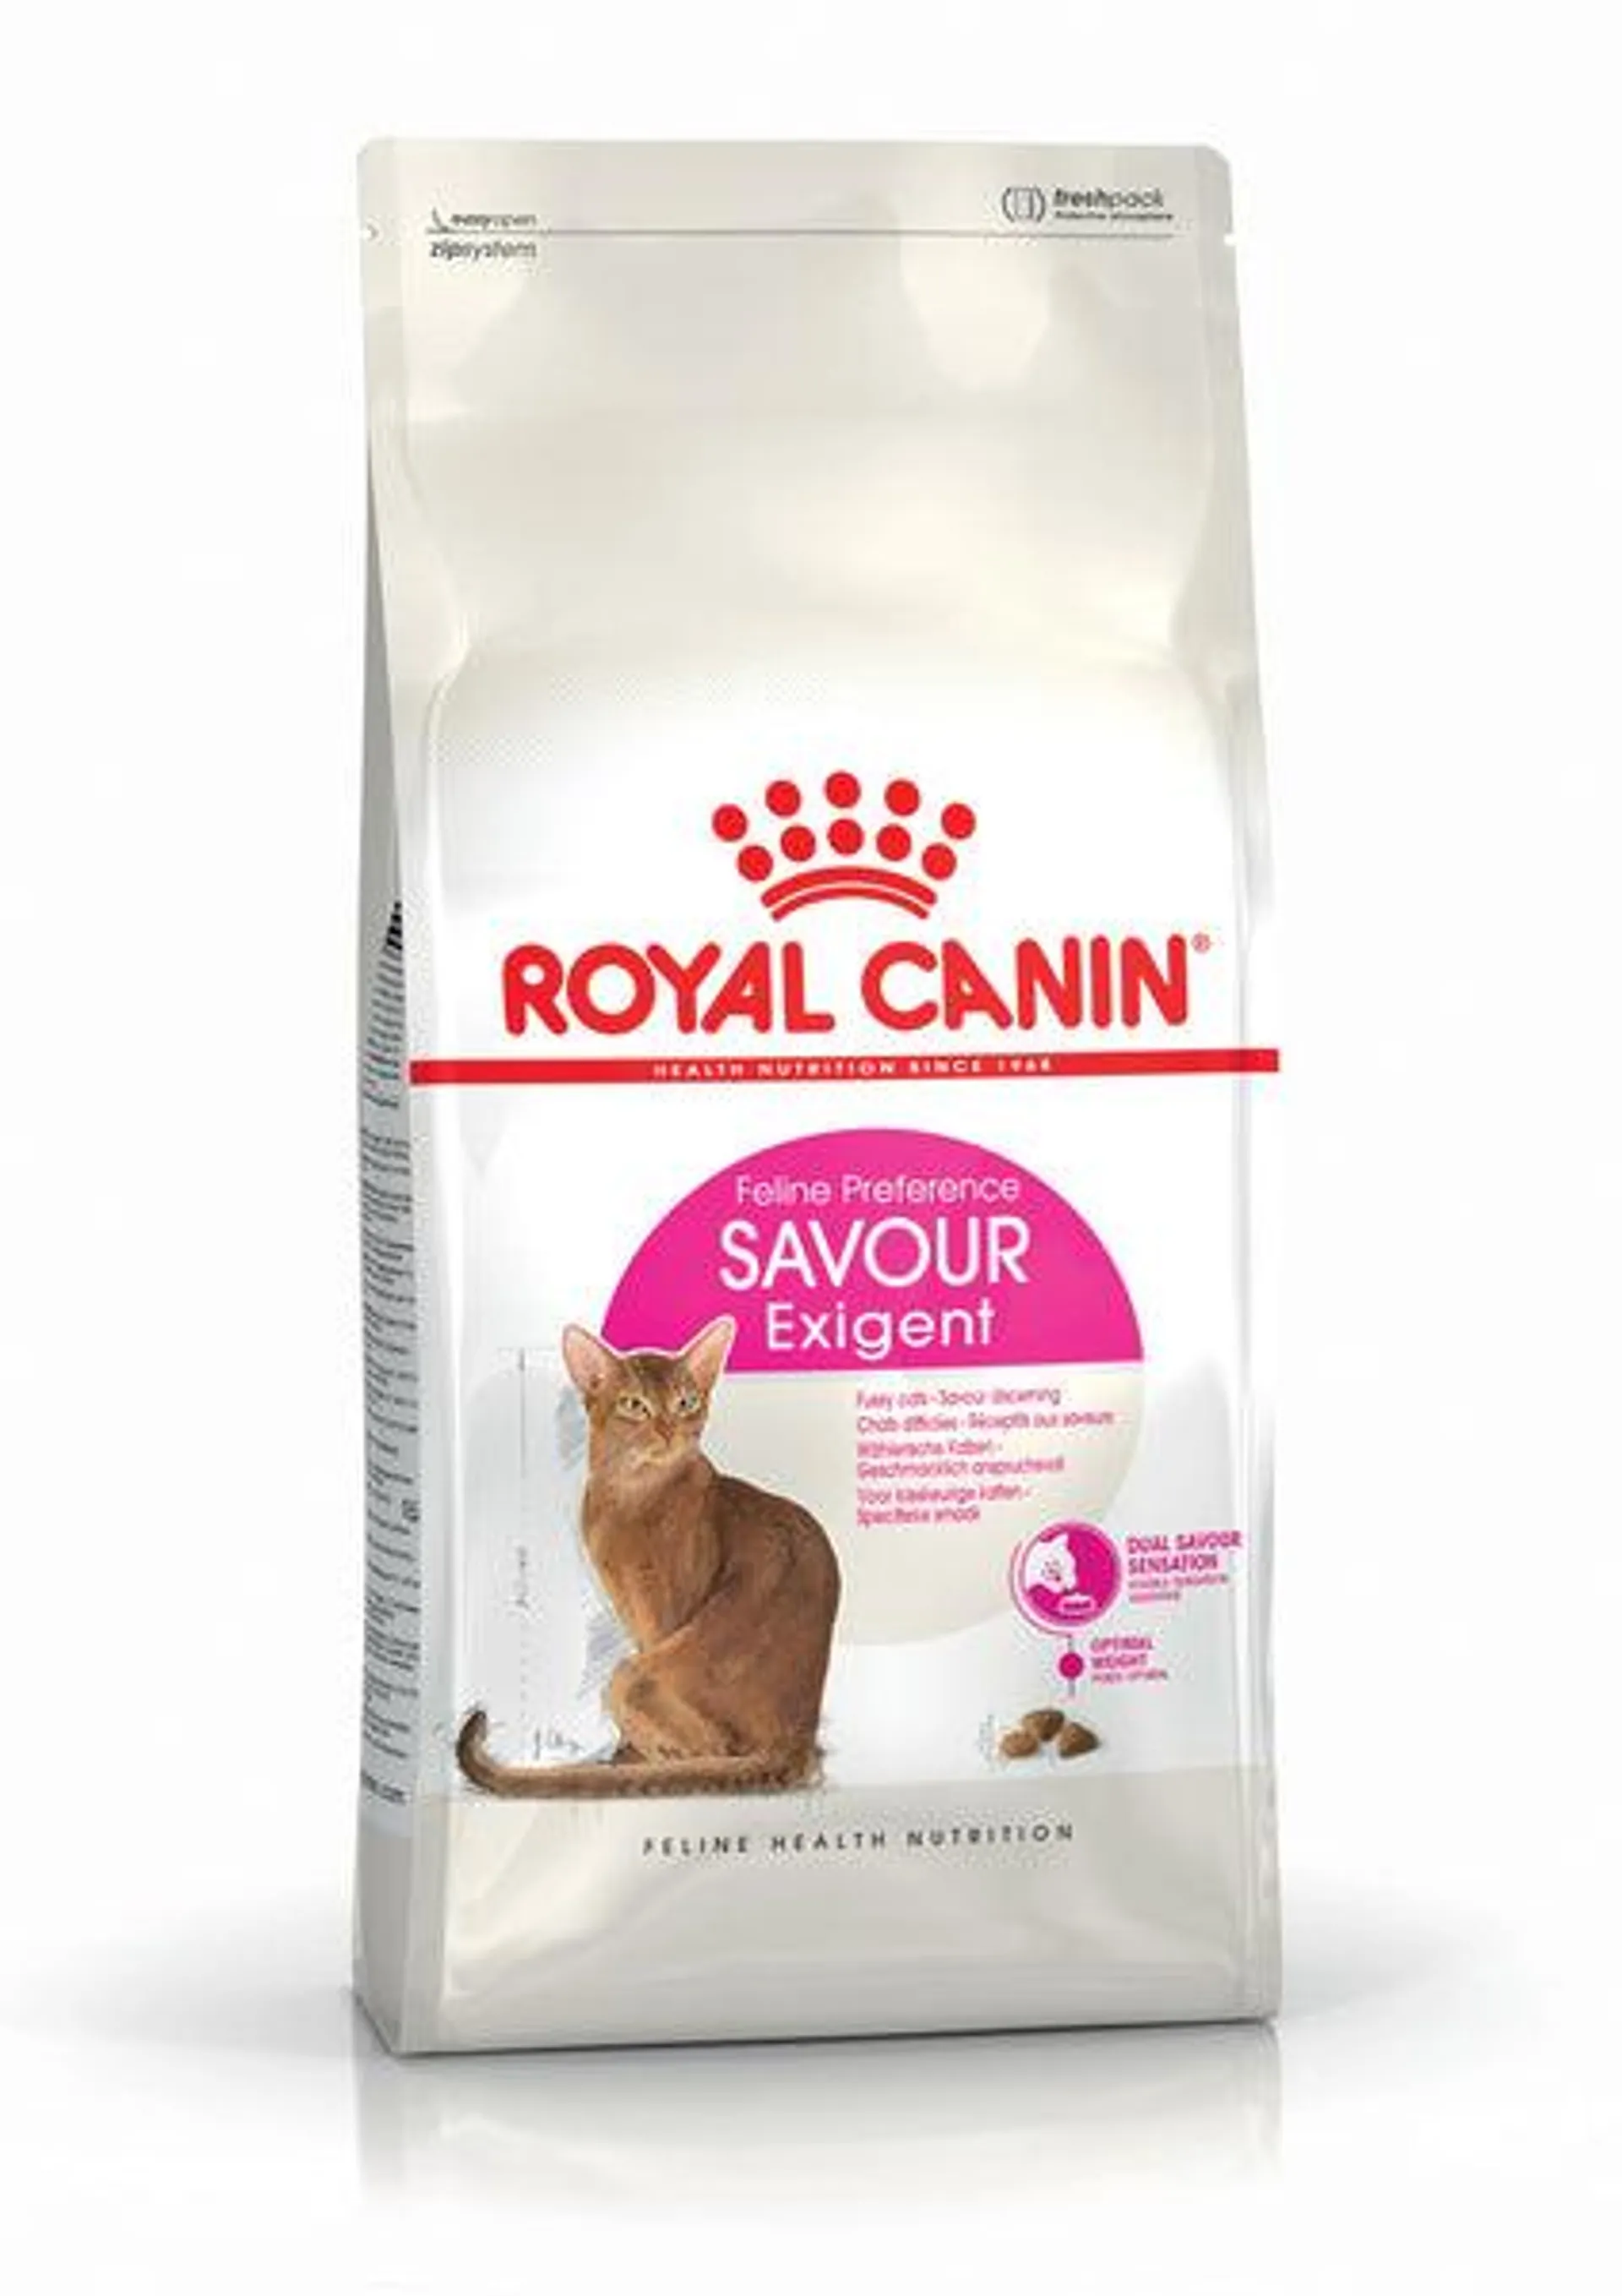 Royal Canin - Exigent Savour Sensation Adult Cat Dry Food (2kg)